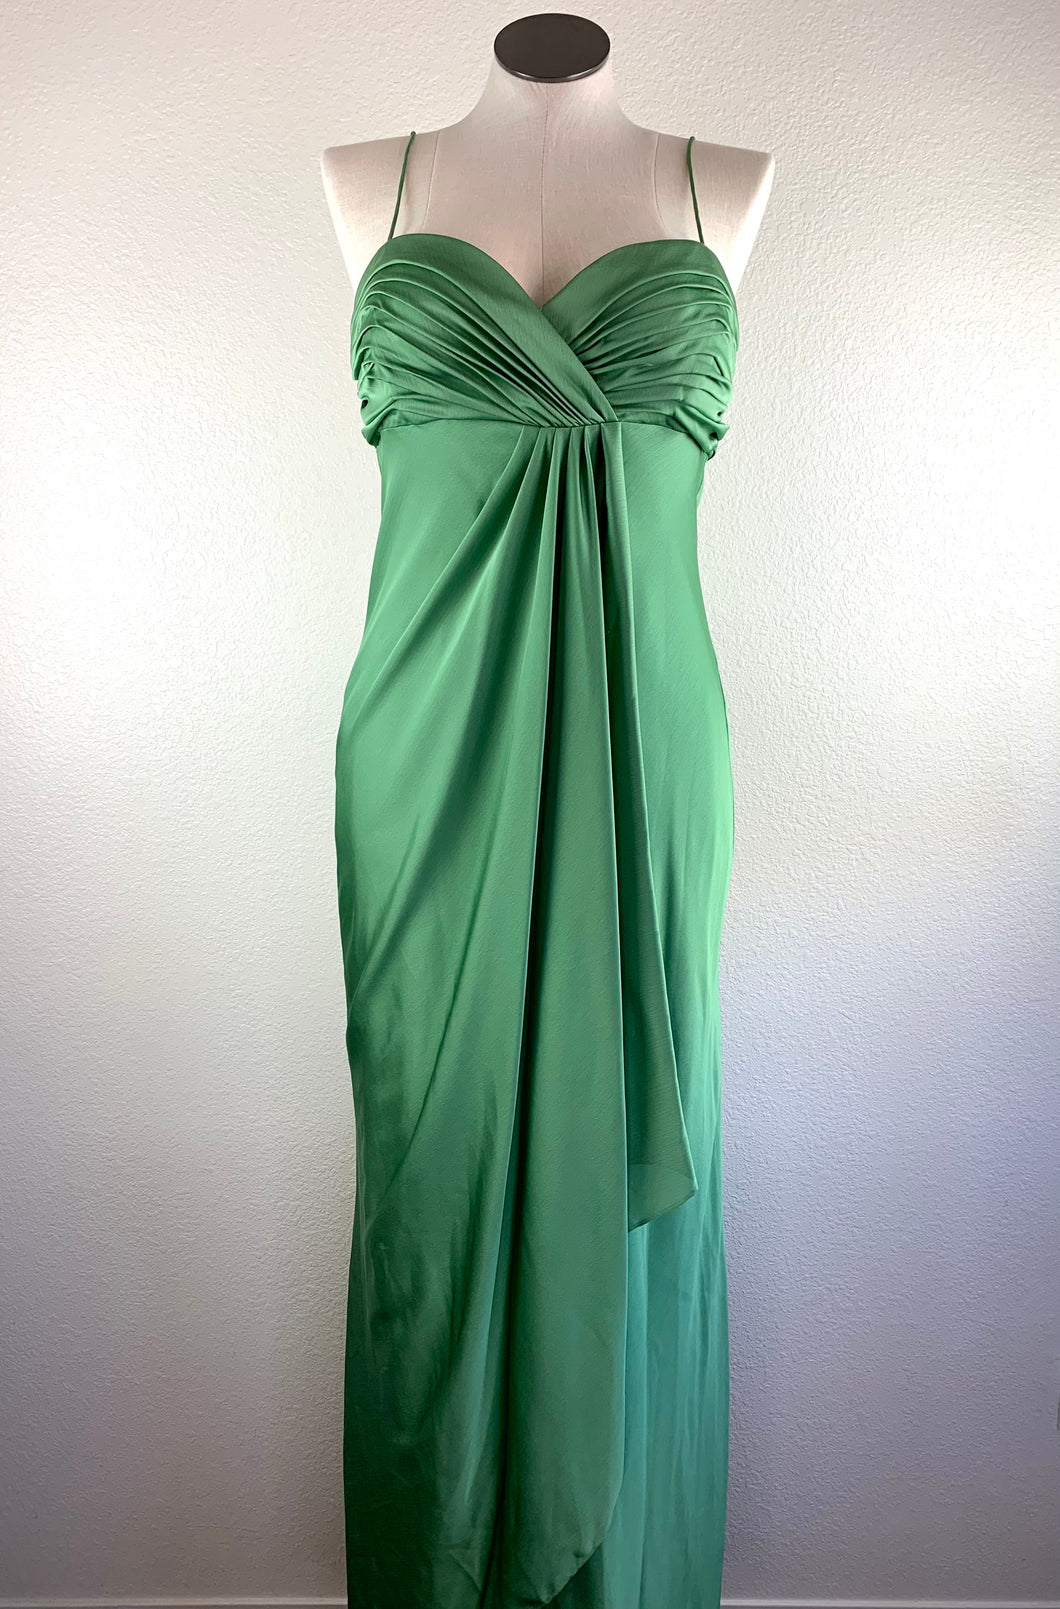 Vineyard Collection Bridesmaid Dress size 12